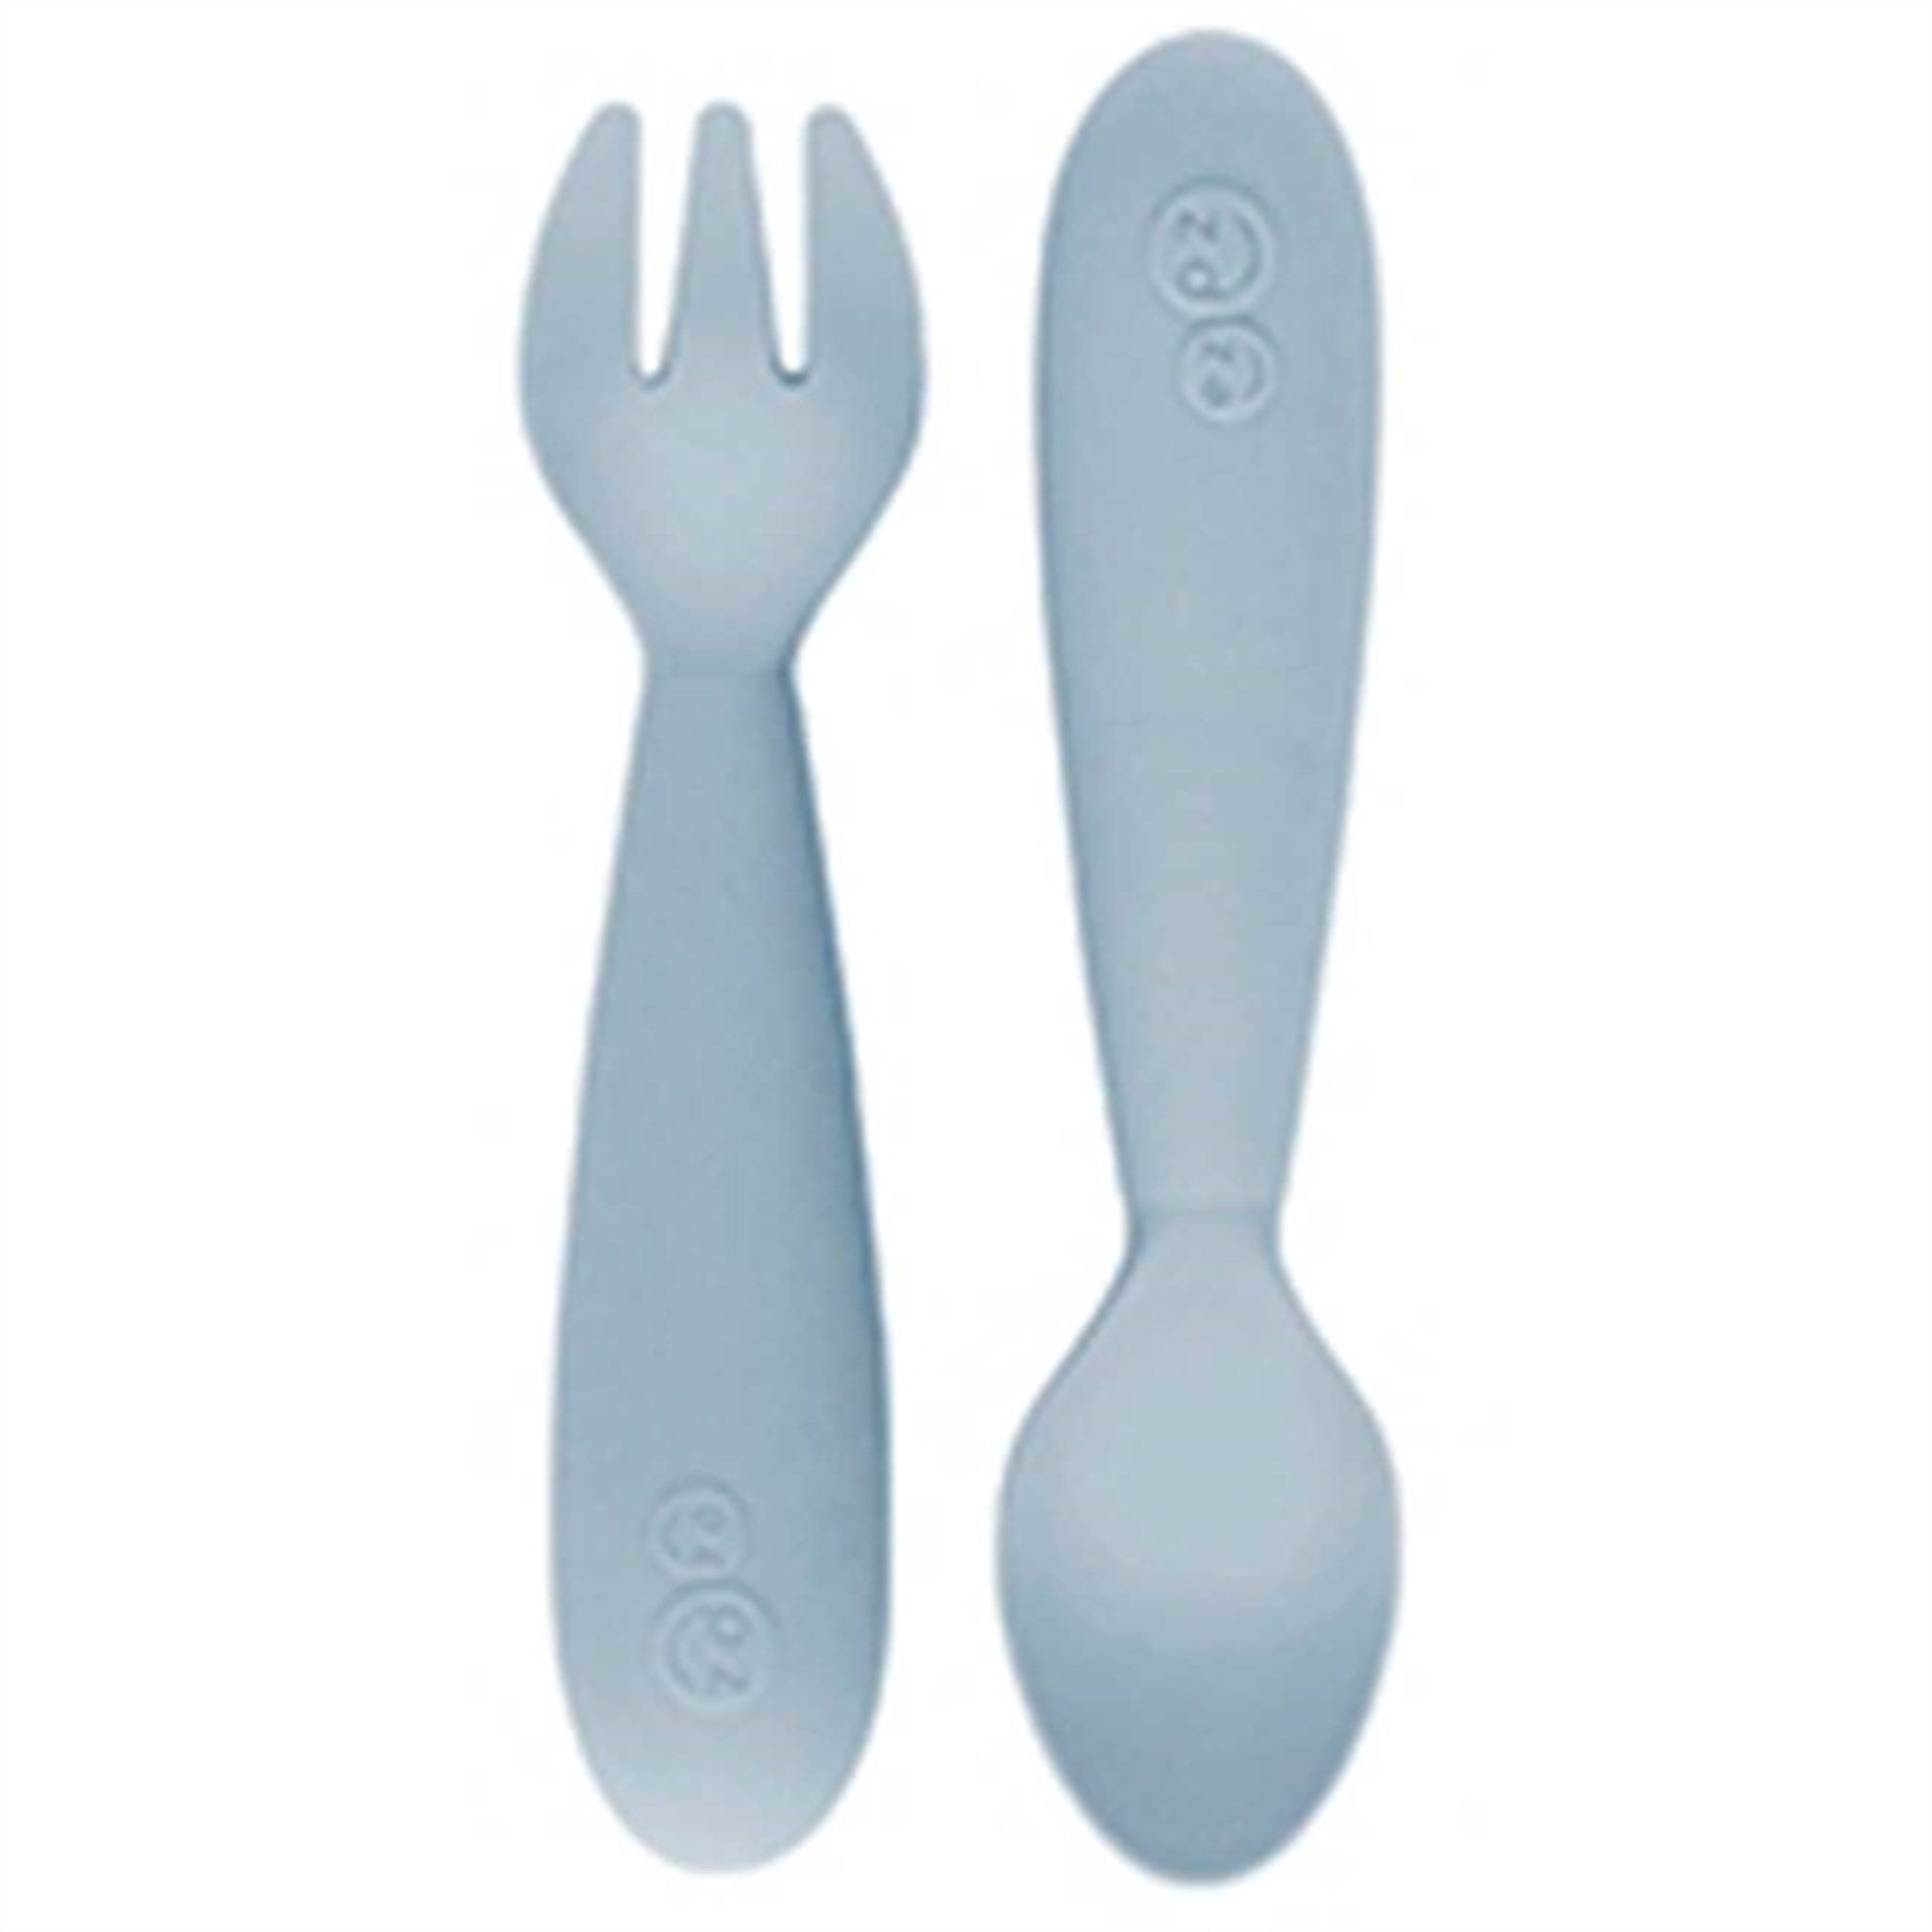 A Little Love Company Mini Cutlery Set Gray Blue